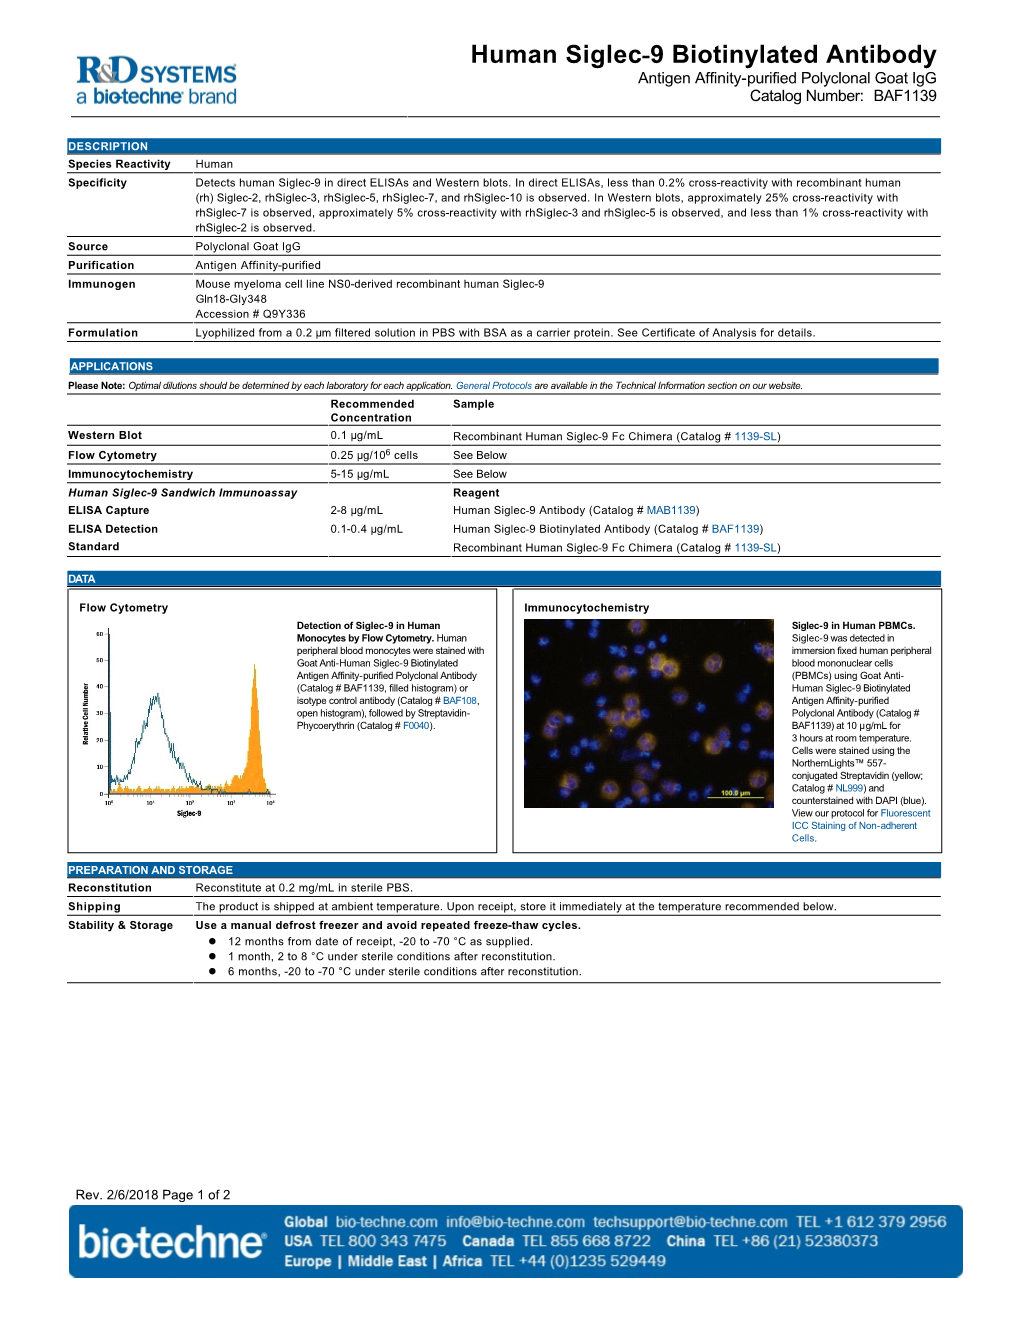 Human Siglec-9 Biotinylated Antibody Antigen Affinity-Purified Polyclonal Goat Igg Catalog Number: BAF1139